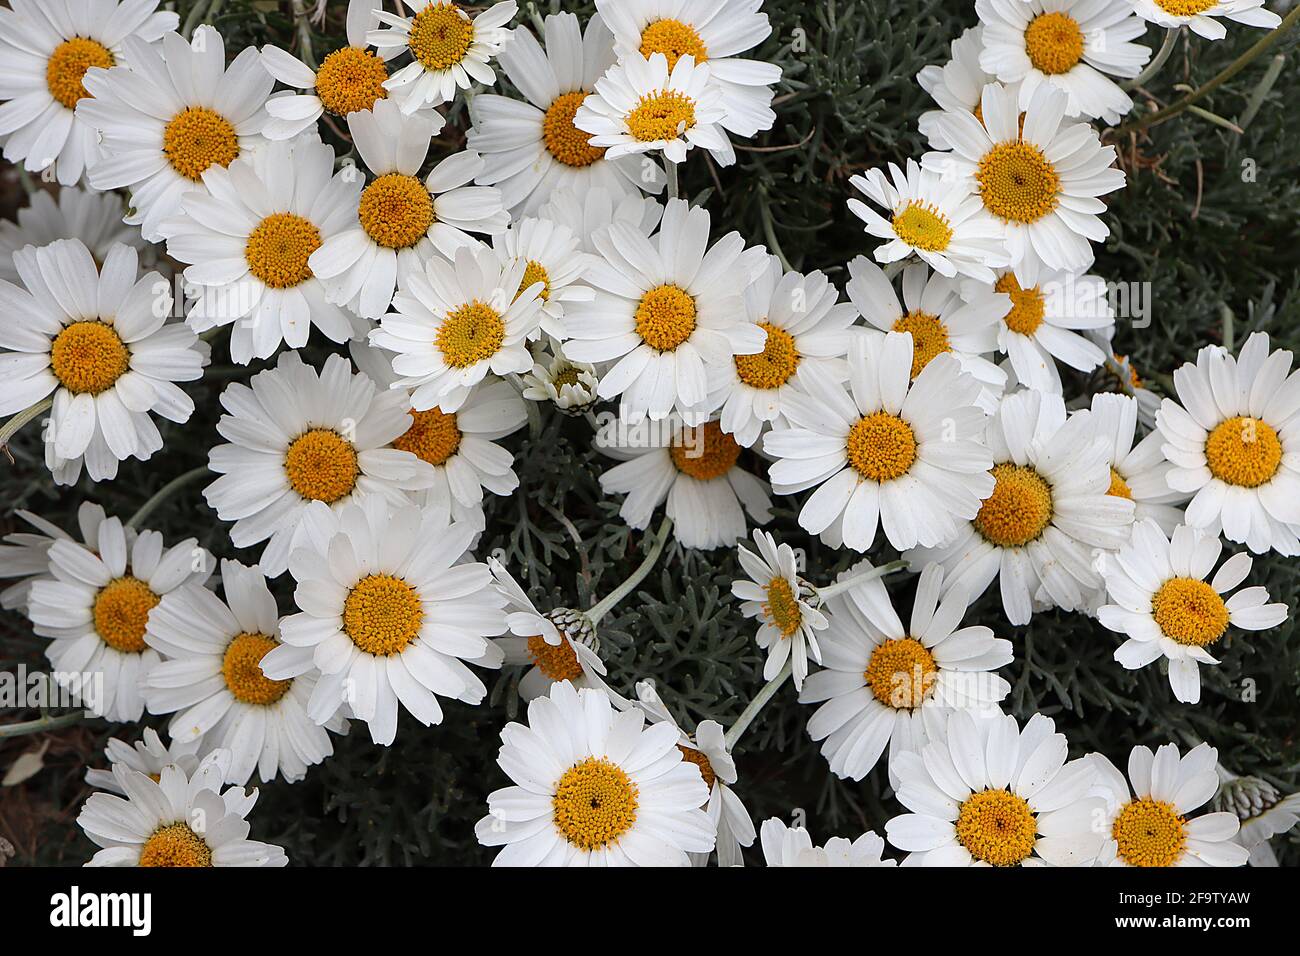 Rhodanthemum hosmariense ‘Casablanca’ Moroccan daisy – white daisy-like flowers with yellow brown centre,  April, England, UK Stock Photo